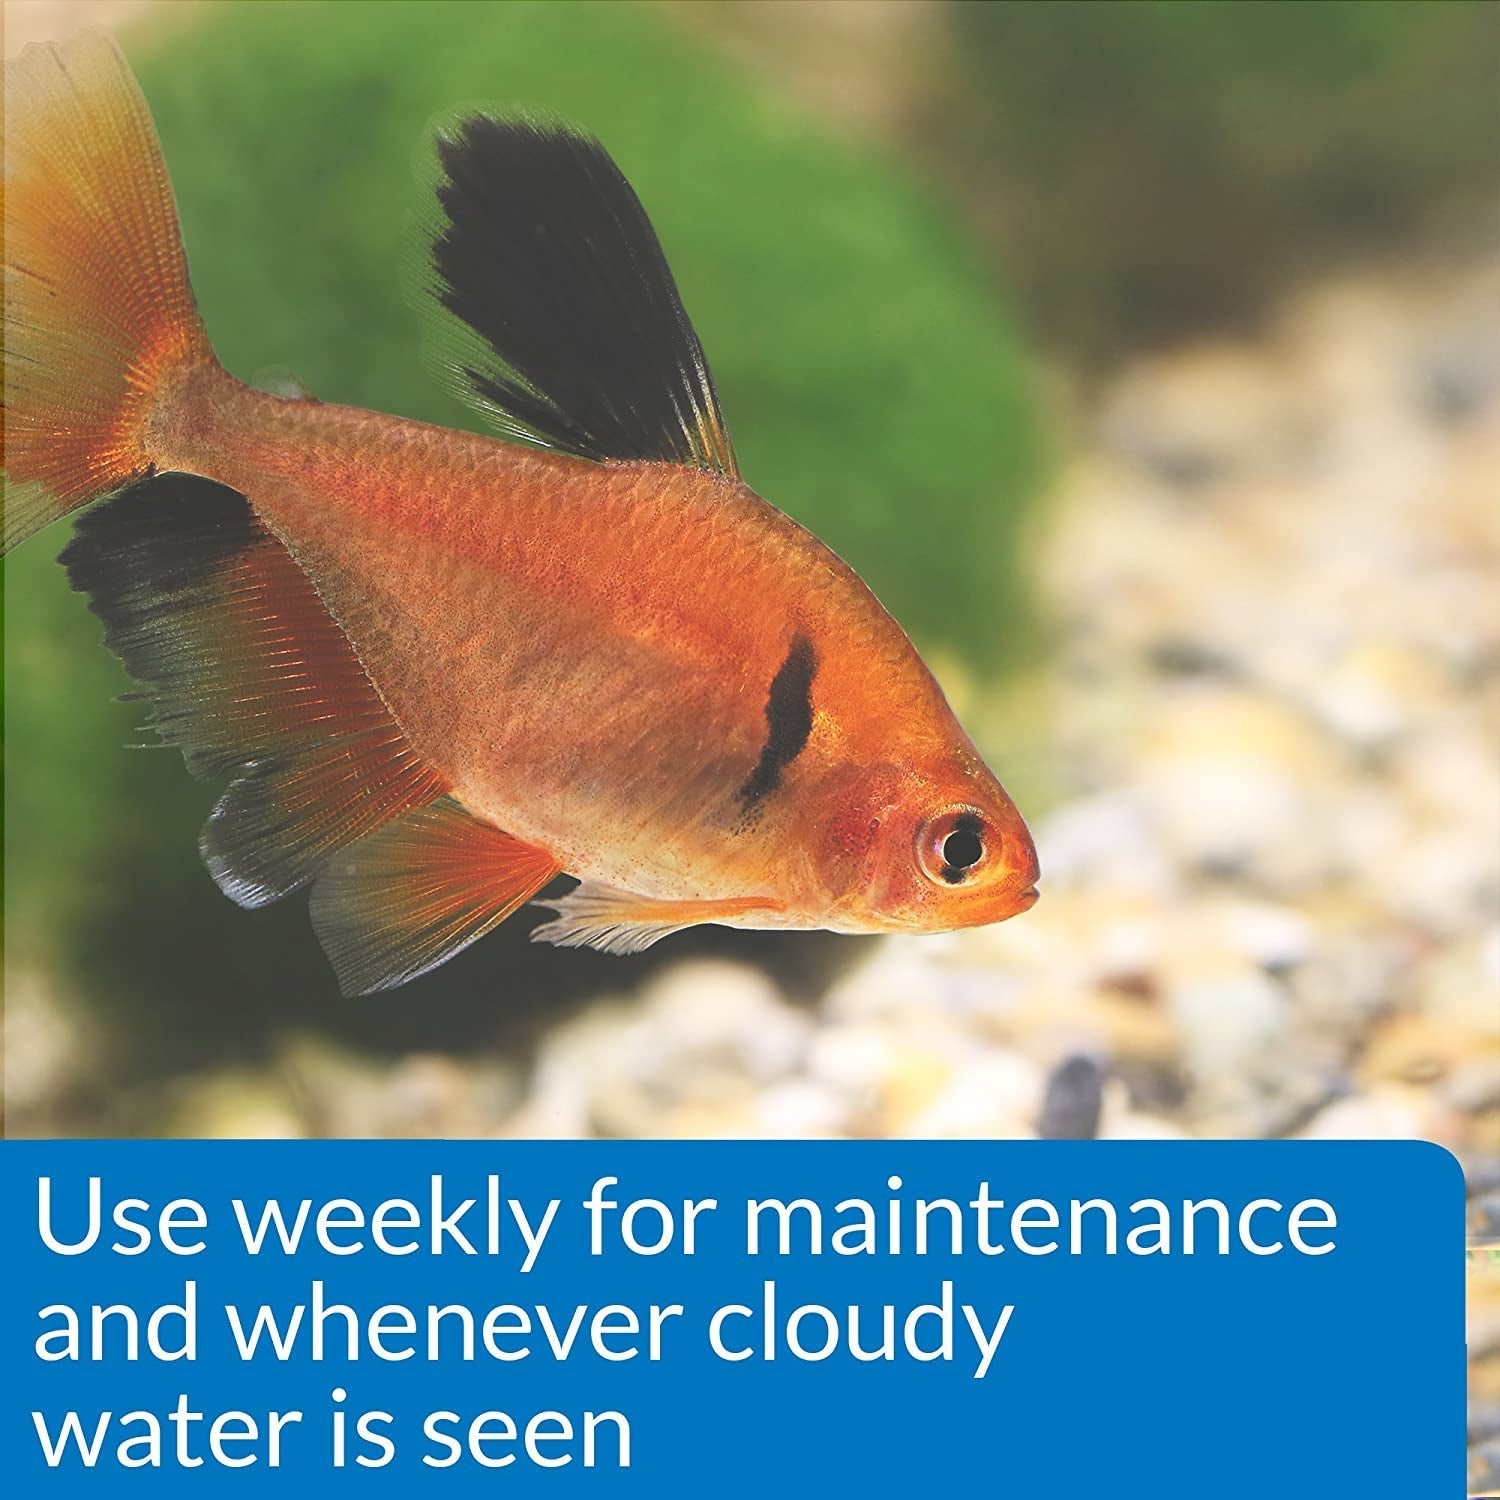 API Accu-Clear Clears Cloudy Aquarium Water Aquariums For Beginners